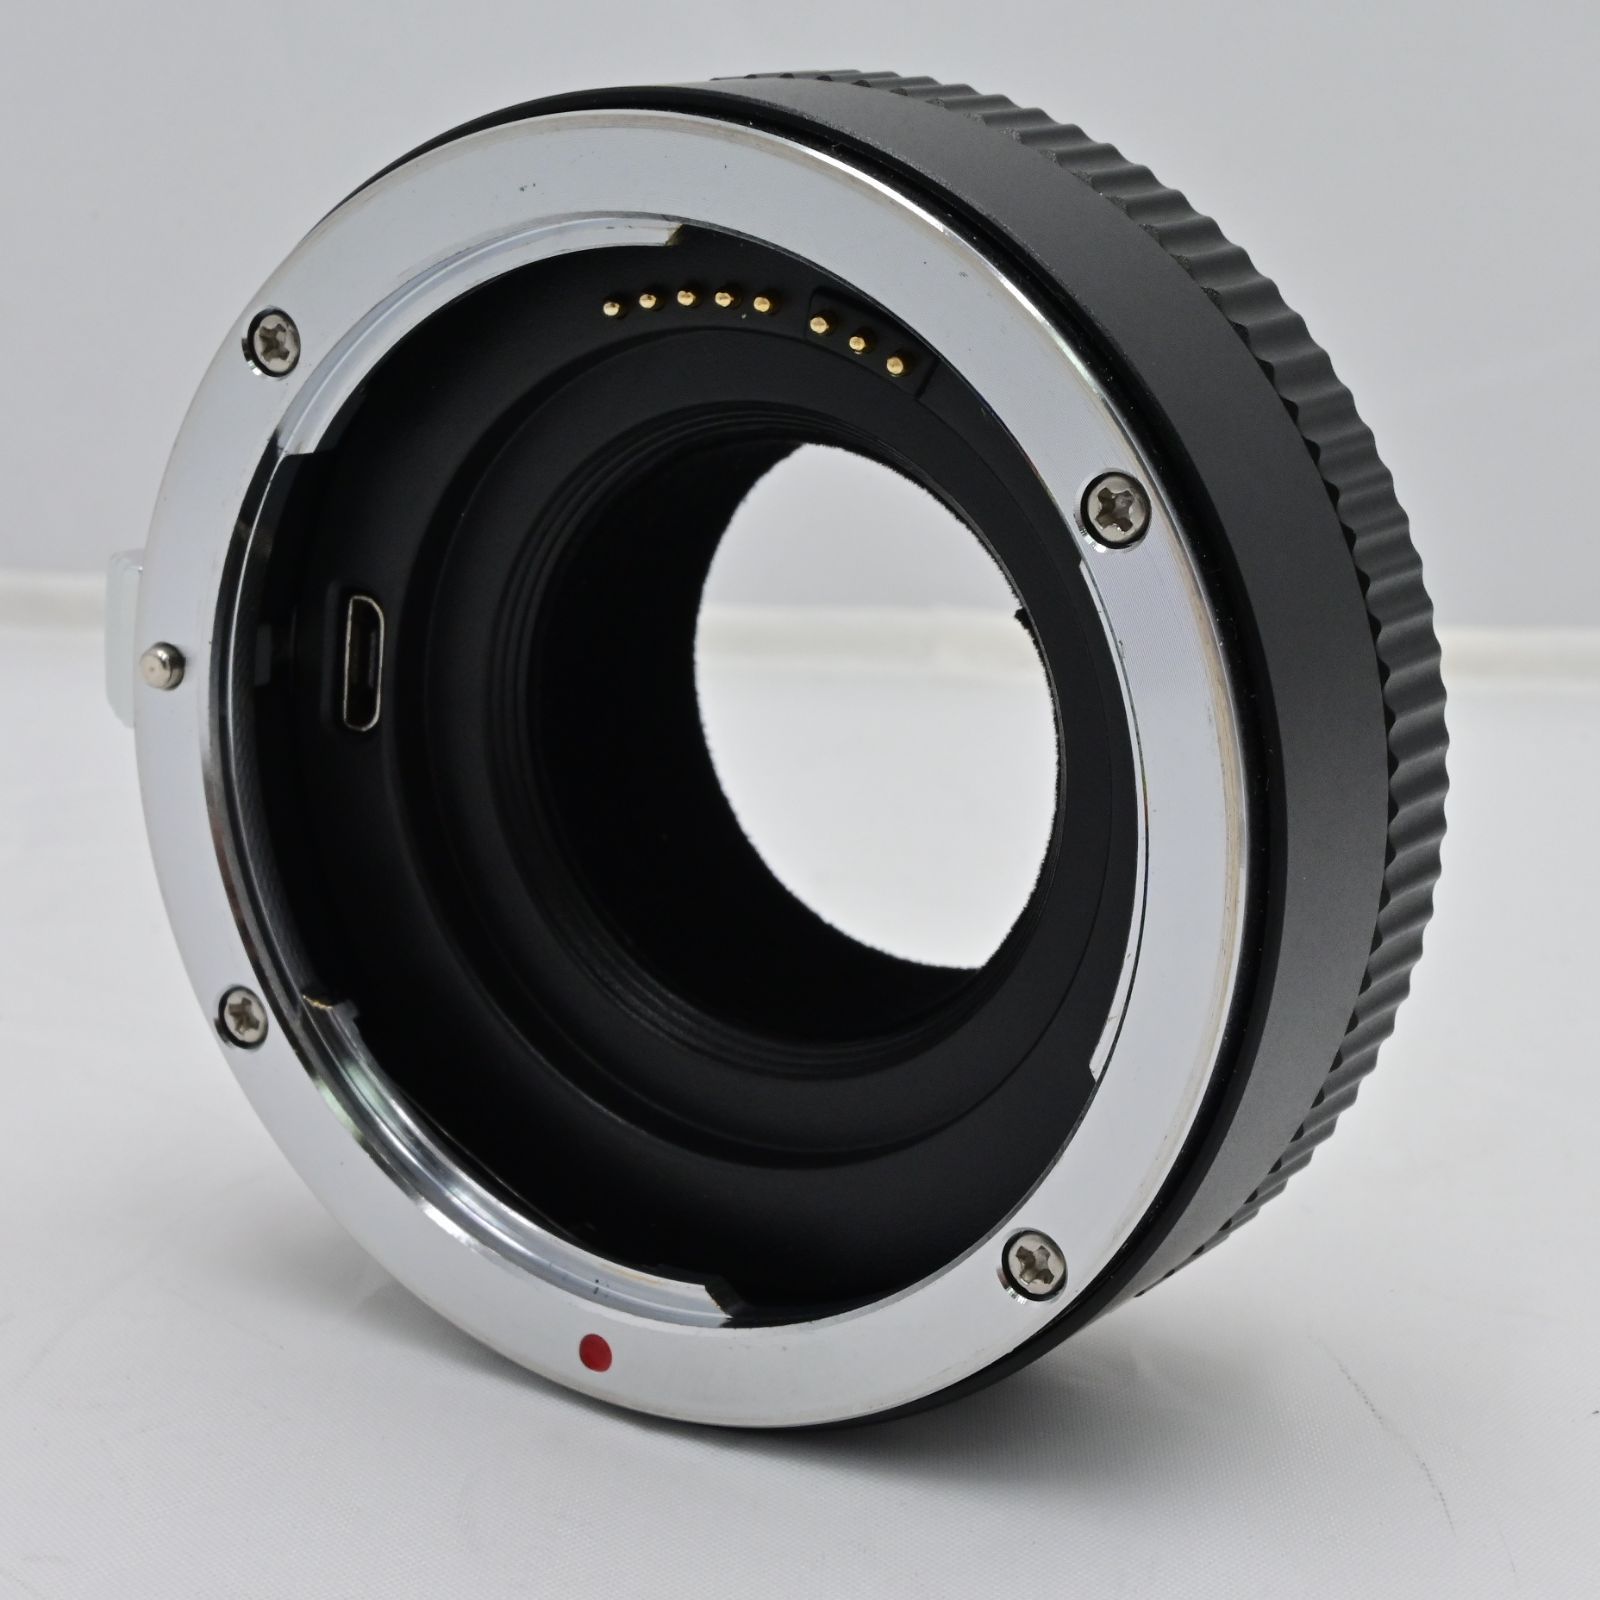 Fringer EF-FX PRO II Fuji オートフォーカスマウントアダプター 内蔵電子絞り自動対応 Canon EOS EFレンズ  Fujifilm X-Mount グッチーカメラ メルカリ